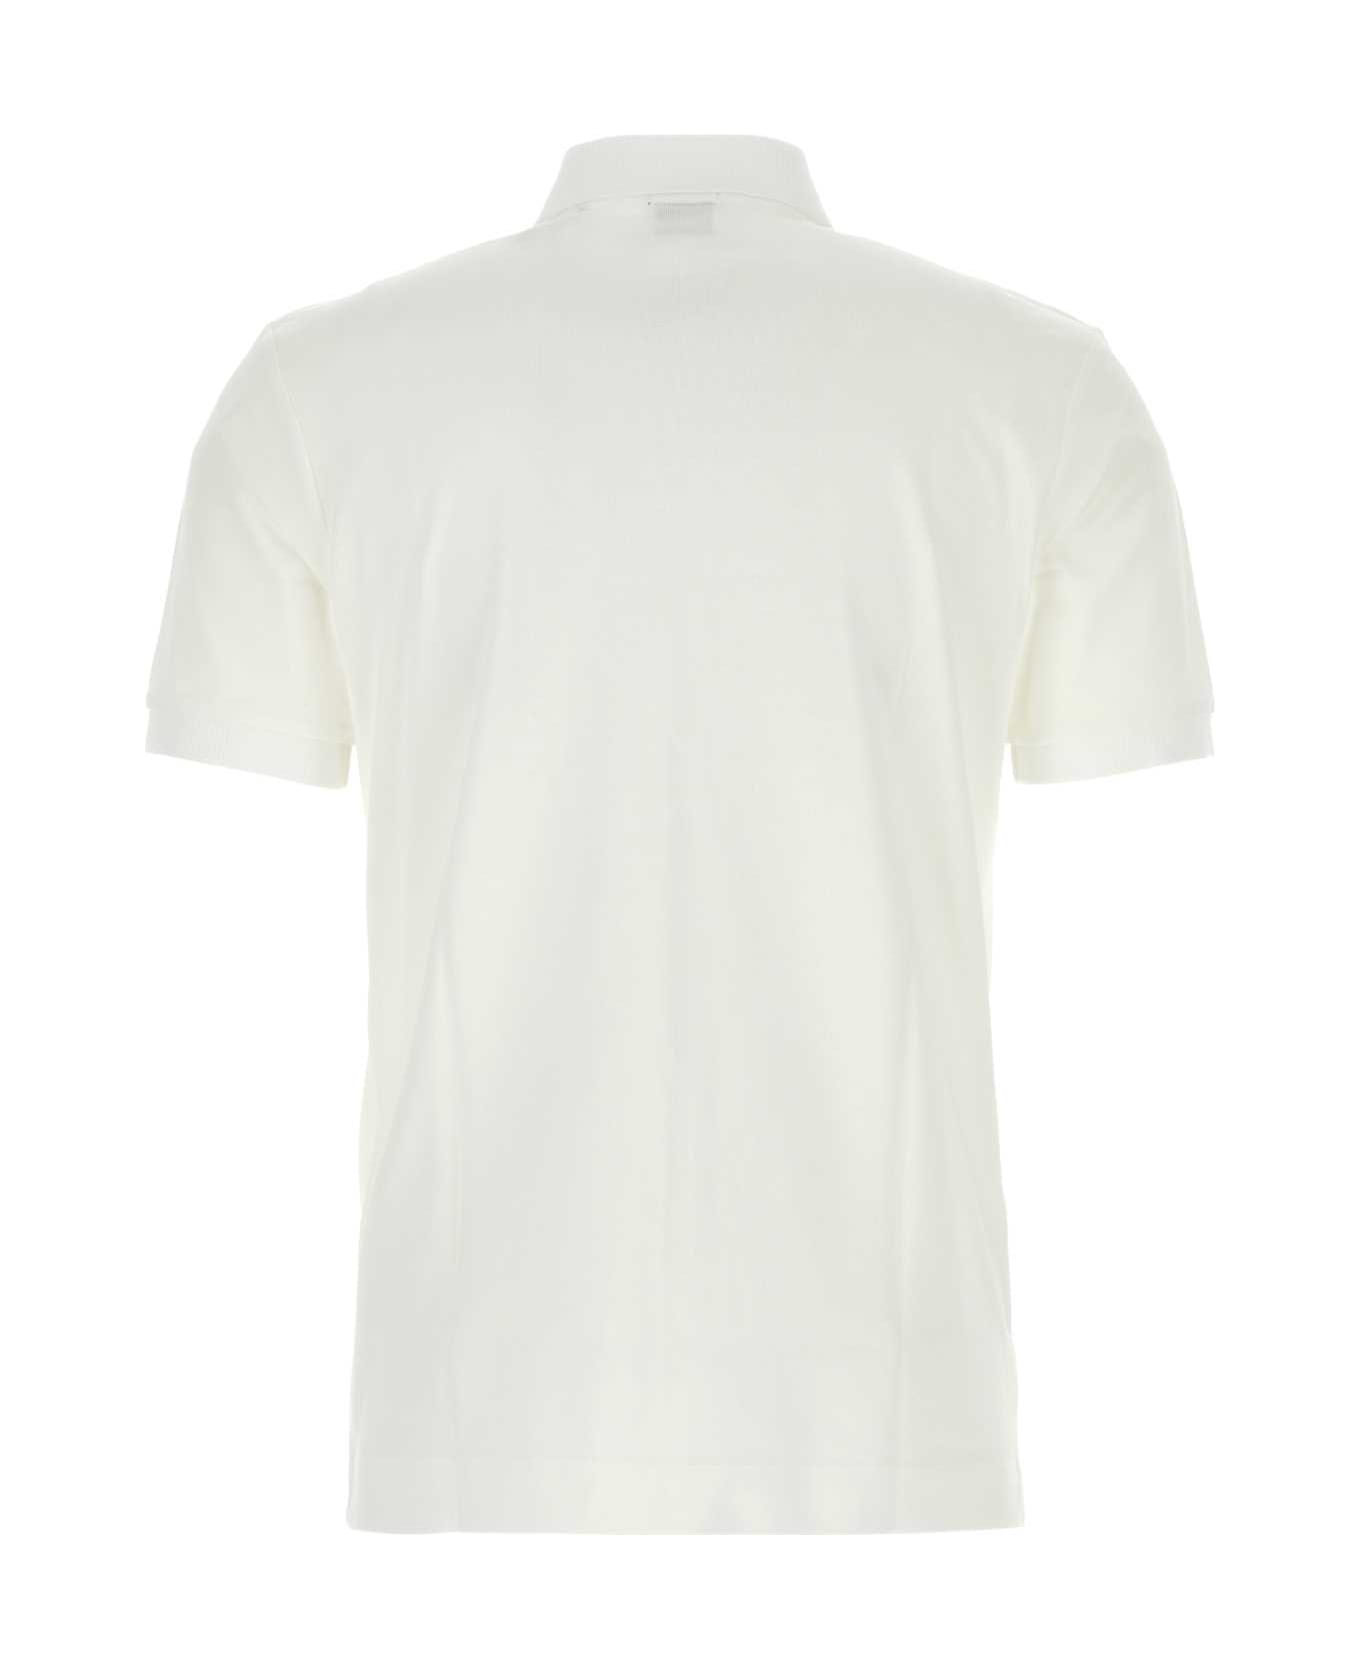 Hugo Boss White Piquet Polo Shirt - White